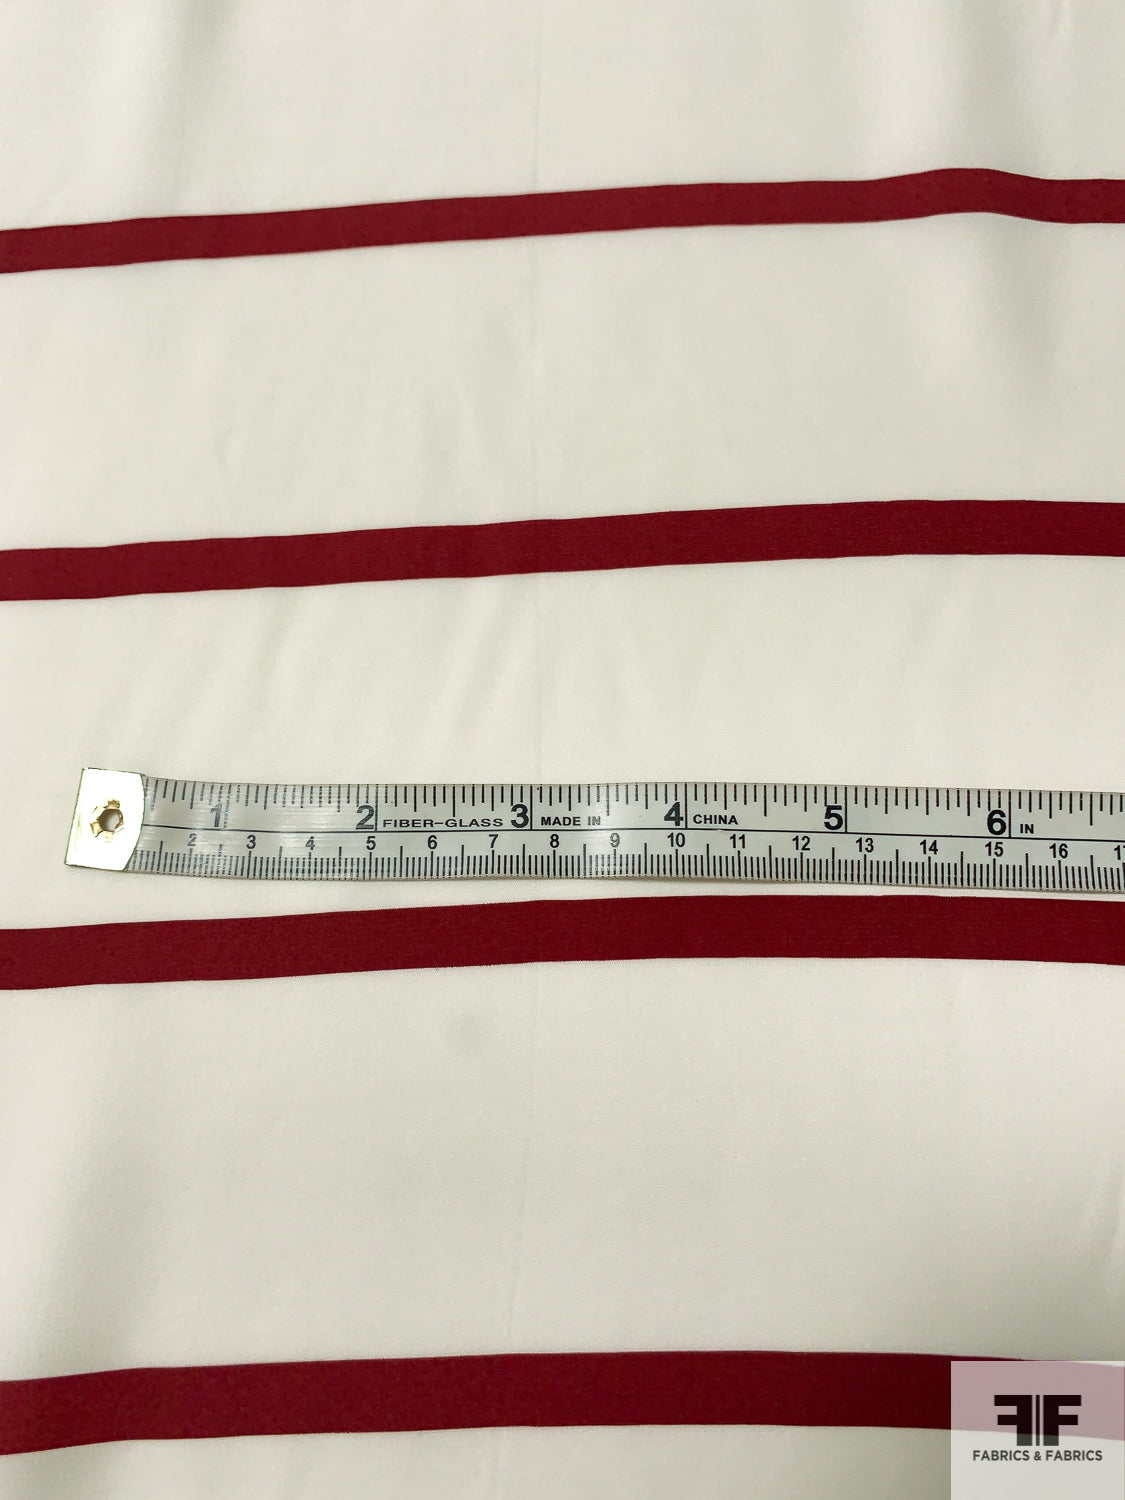 Horizontal Striped Matte-Side Printed Silk Charmeuse - Burgundy / Off-White